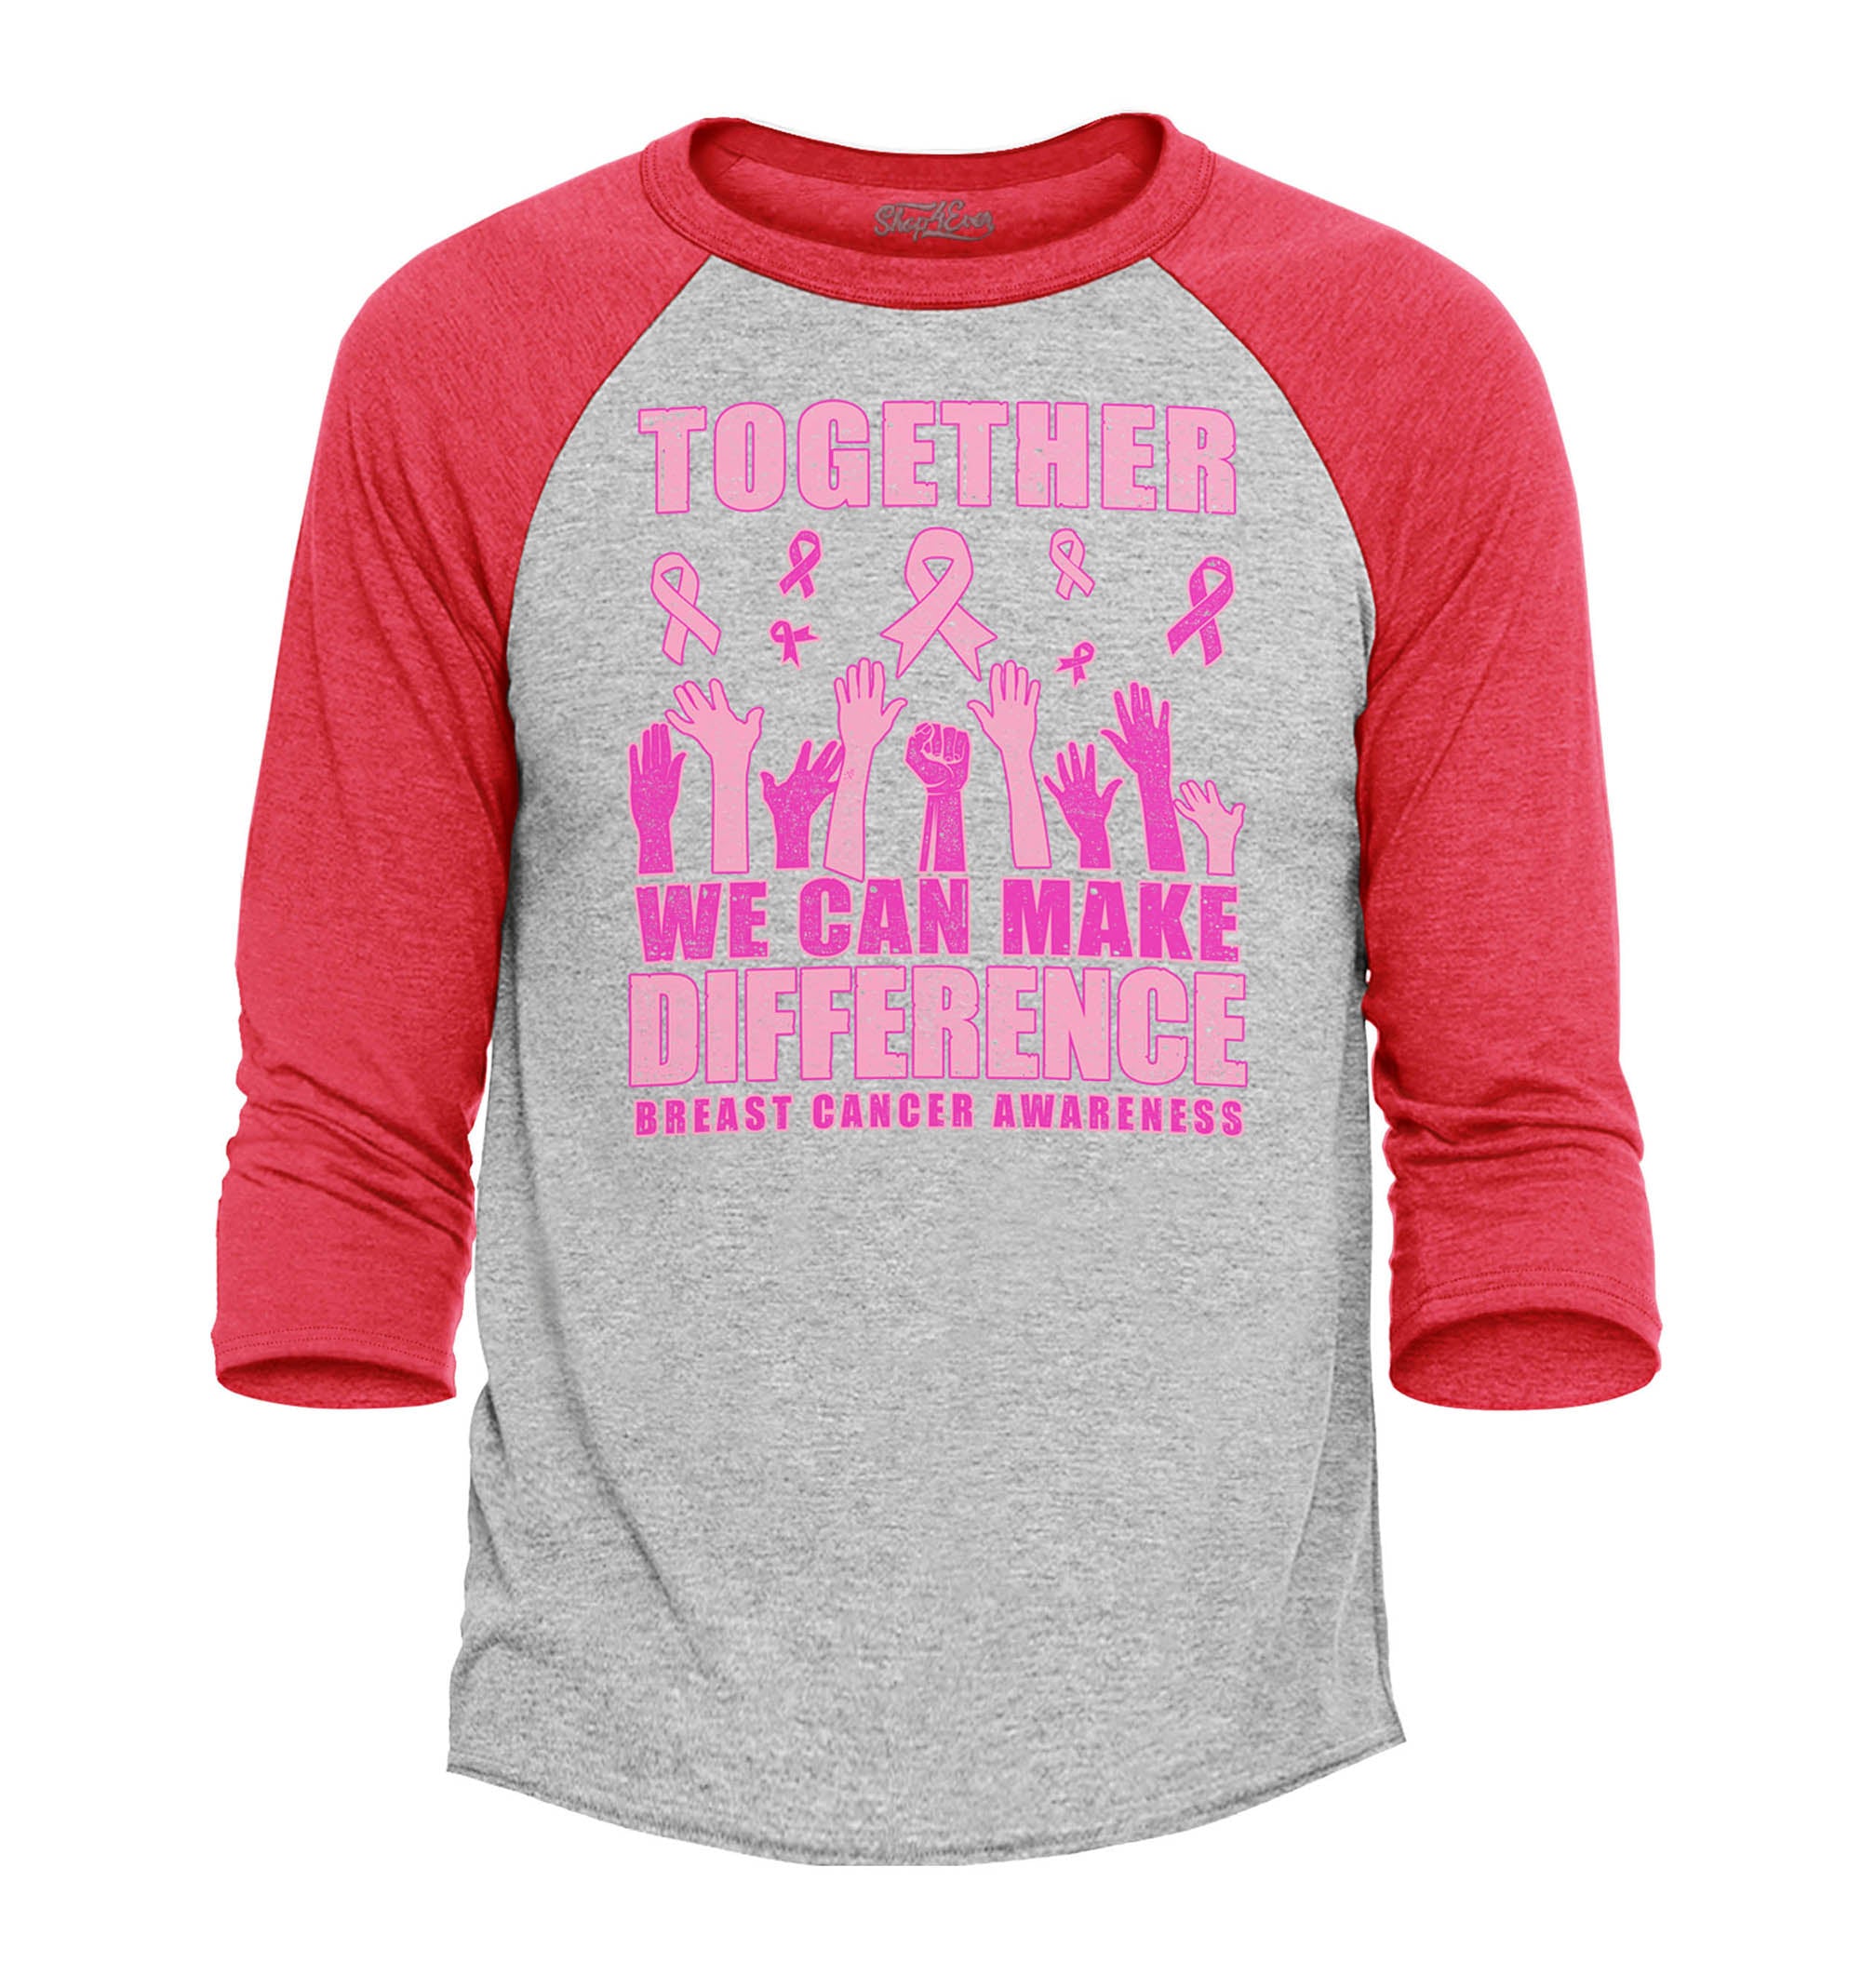 Together We Can Make A Difference Breast Cancer Awareness Raglan Baseball Shirt